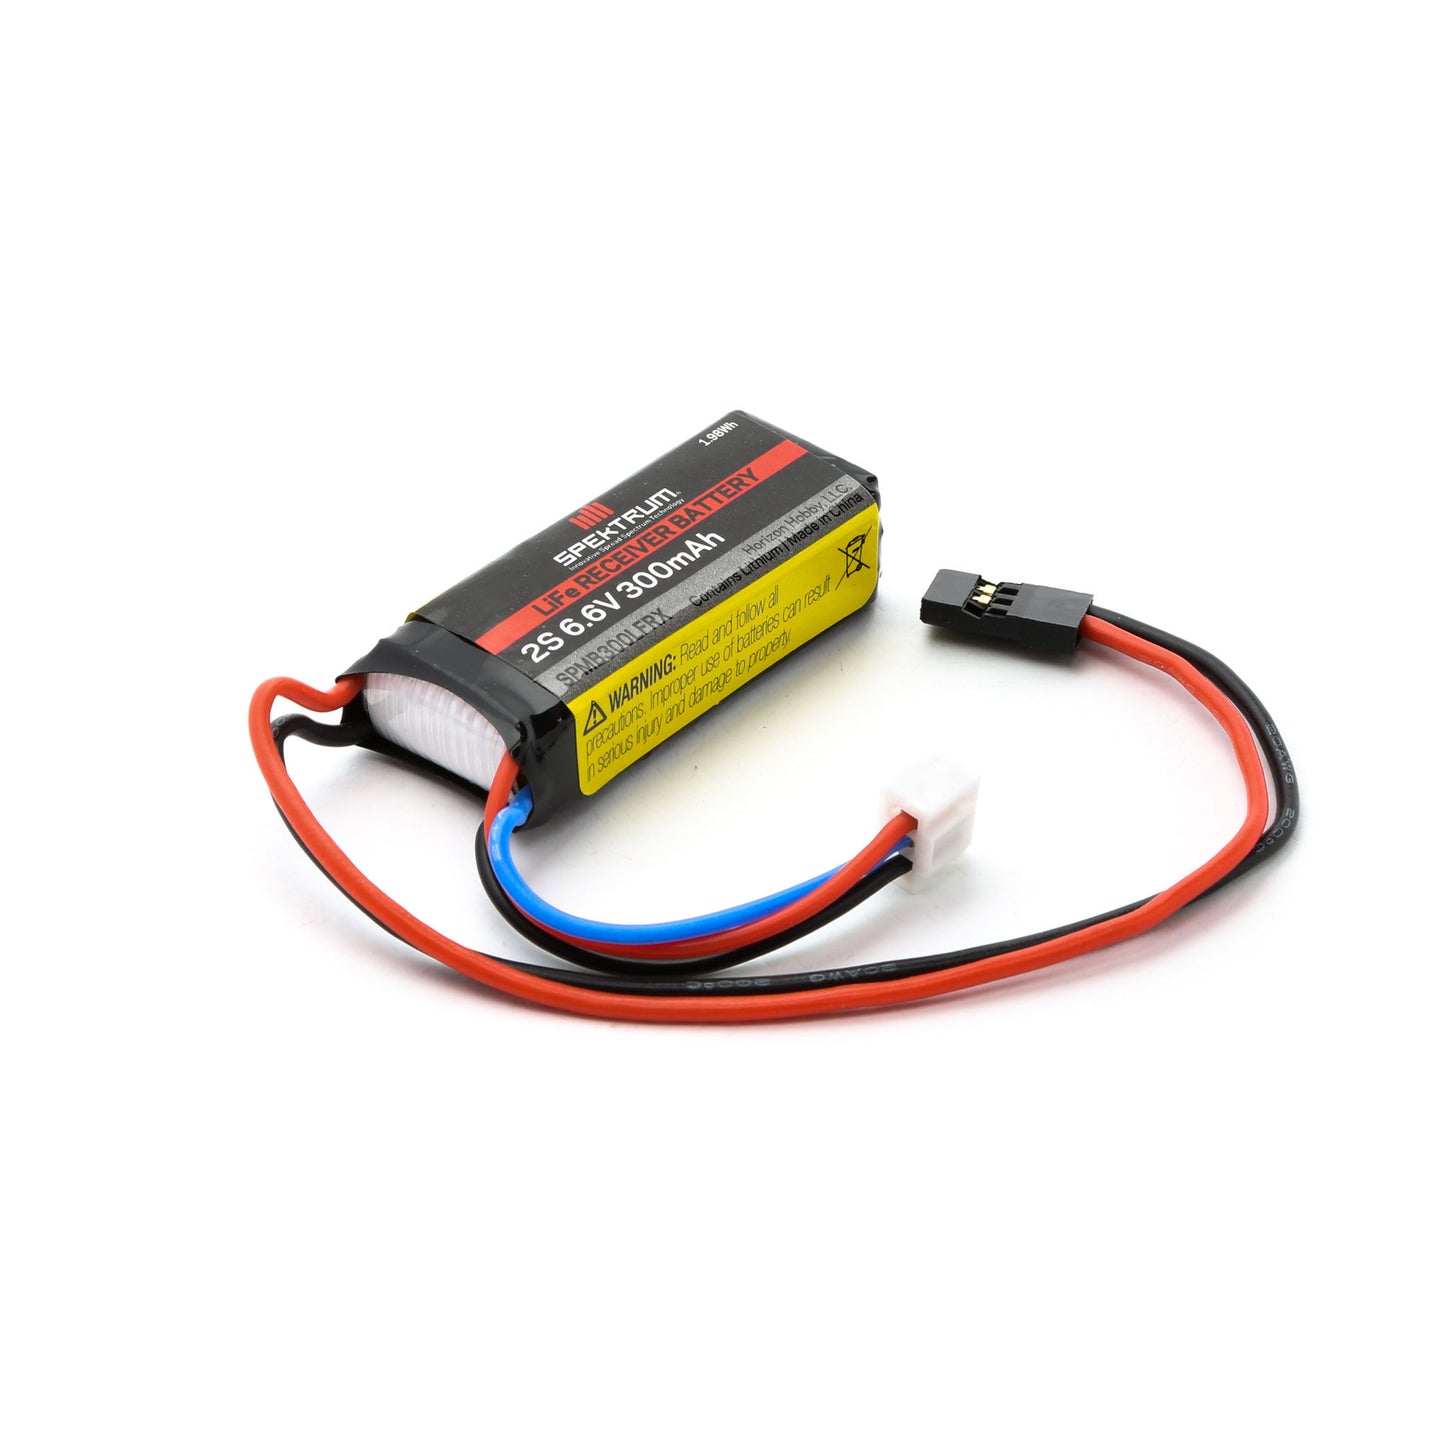 6.6V 300mAh 2S LiFe Receiver Battery: Universal Receiver